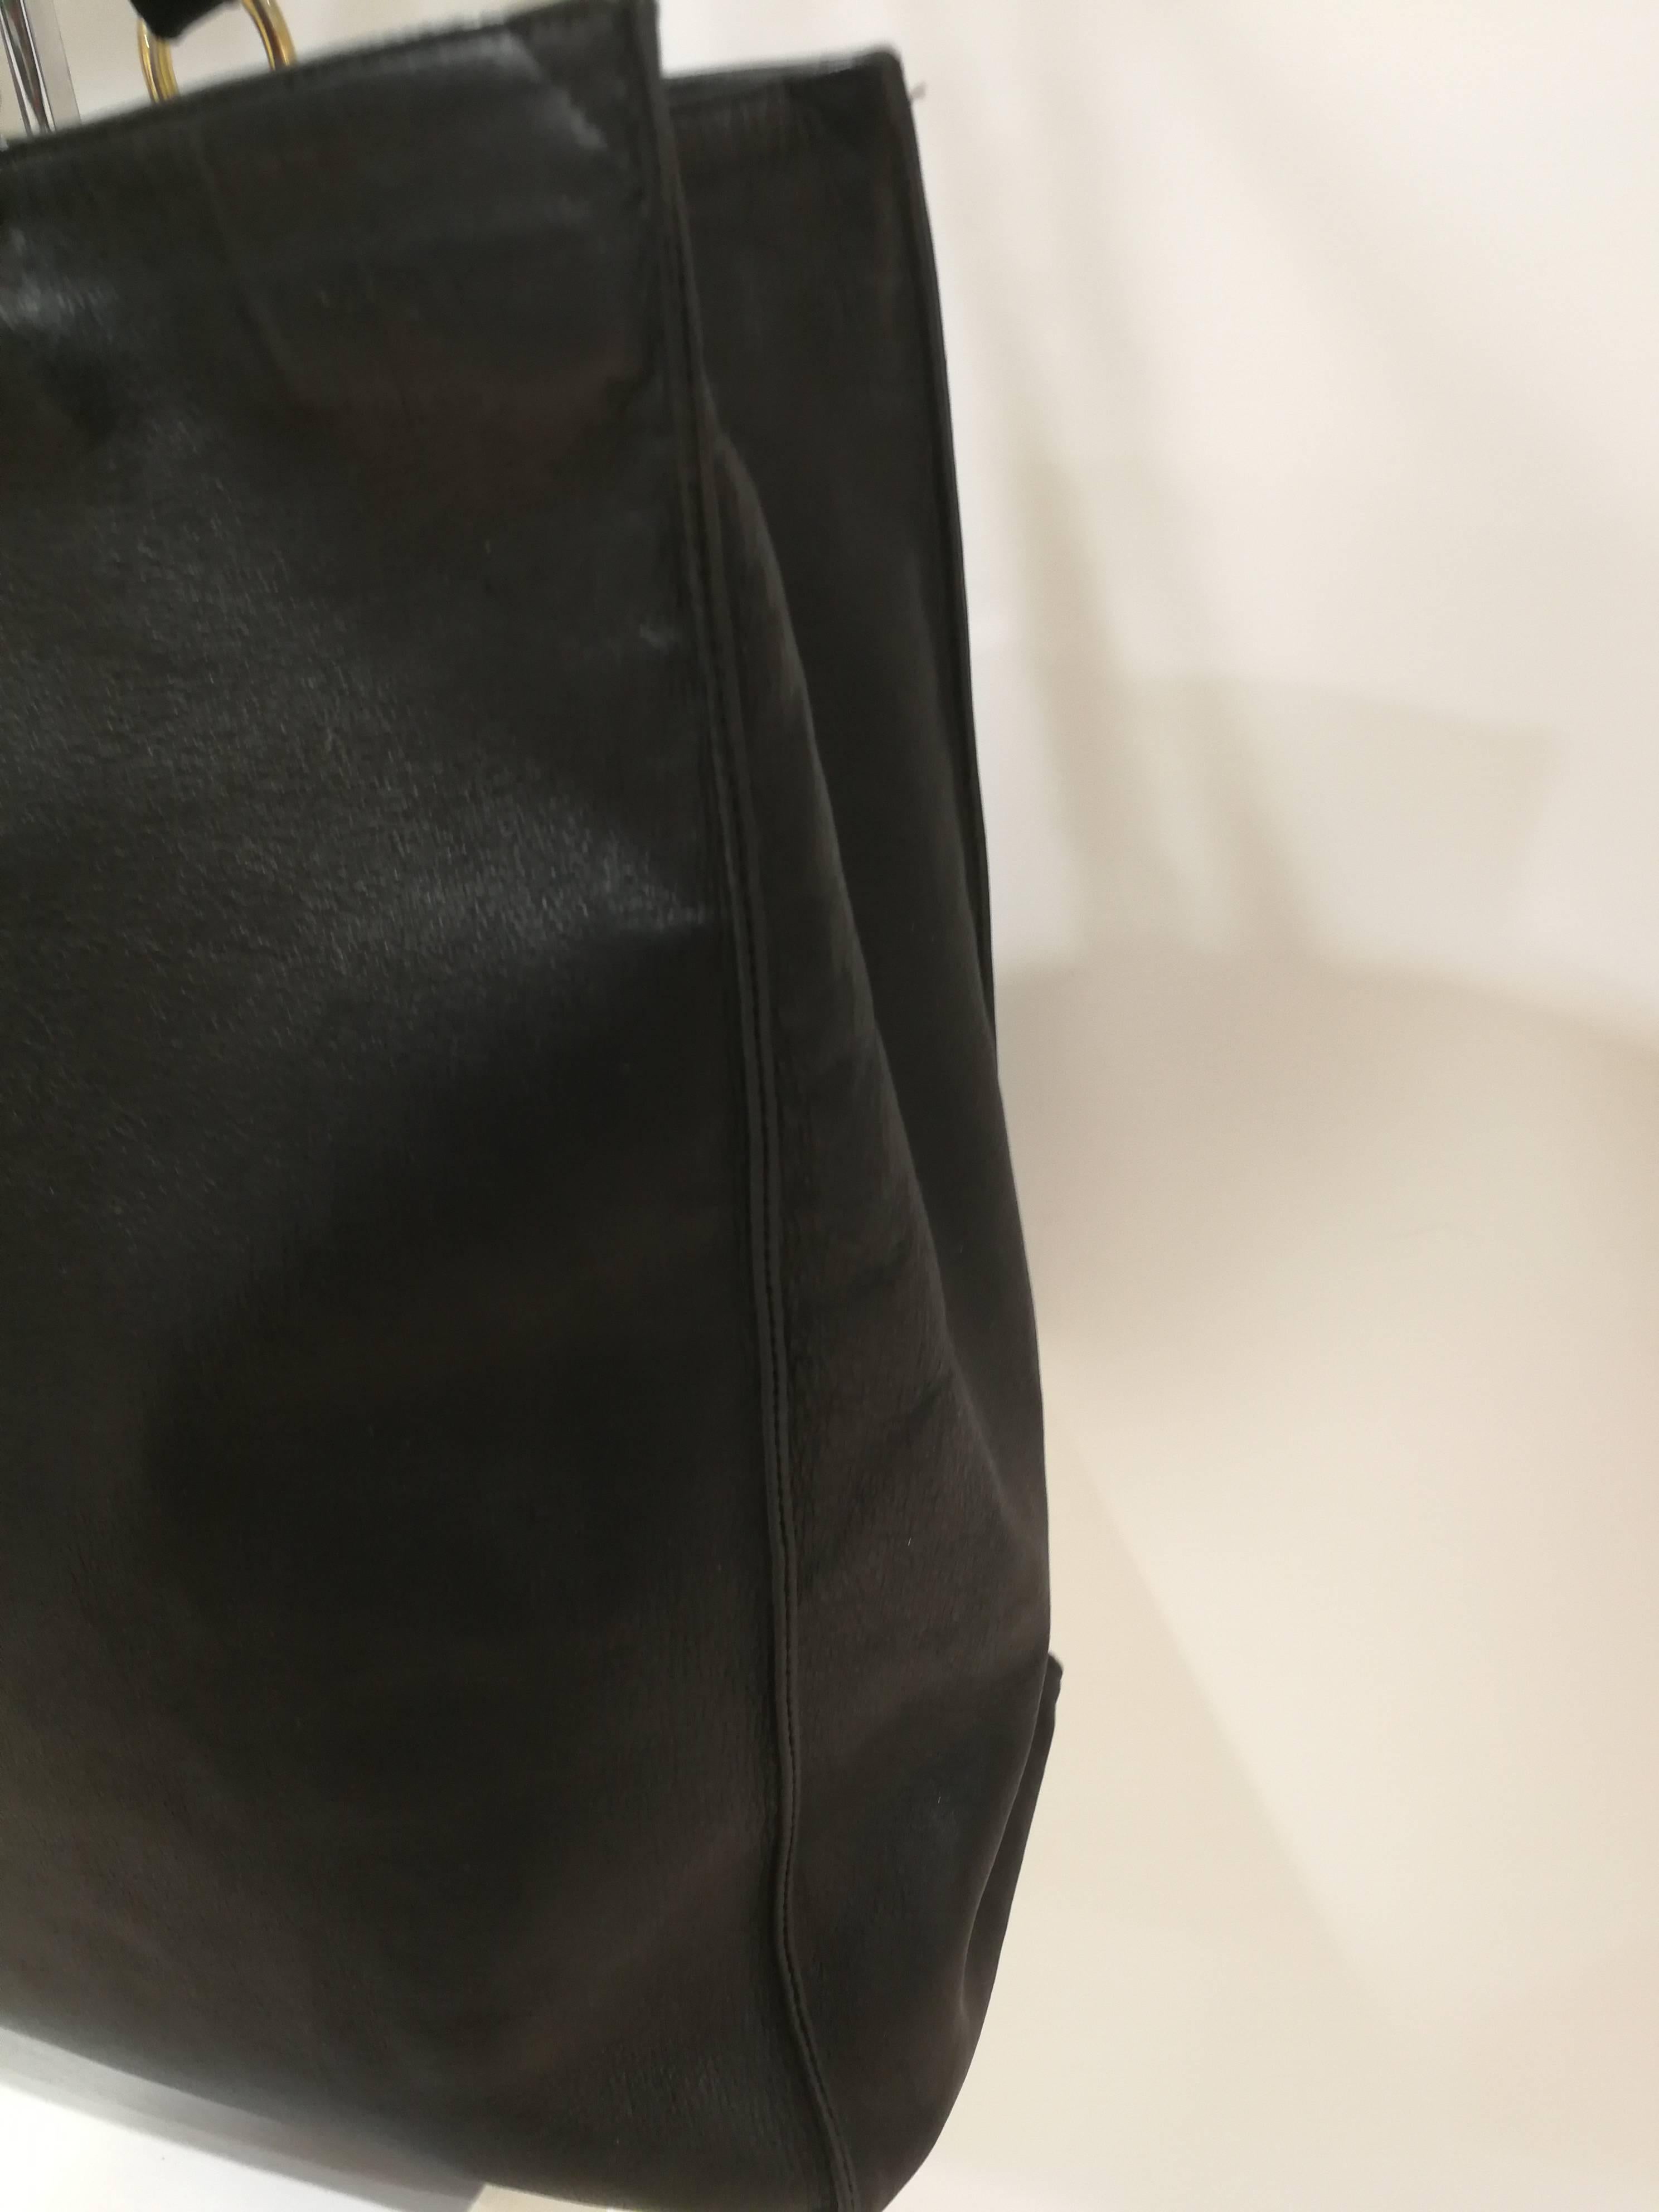 Women's Chanel Black Leather Shopper Bag